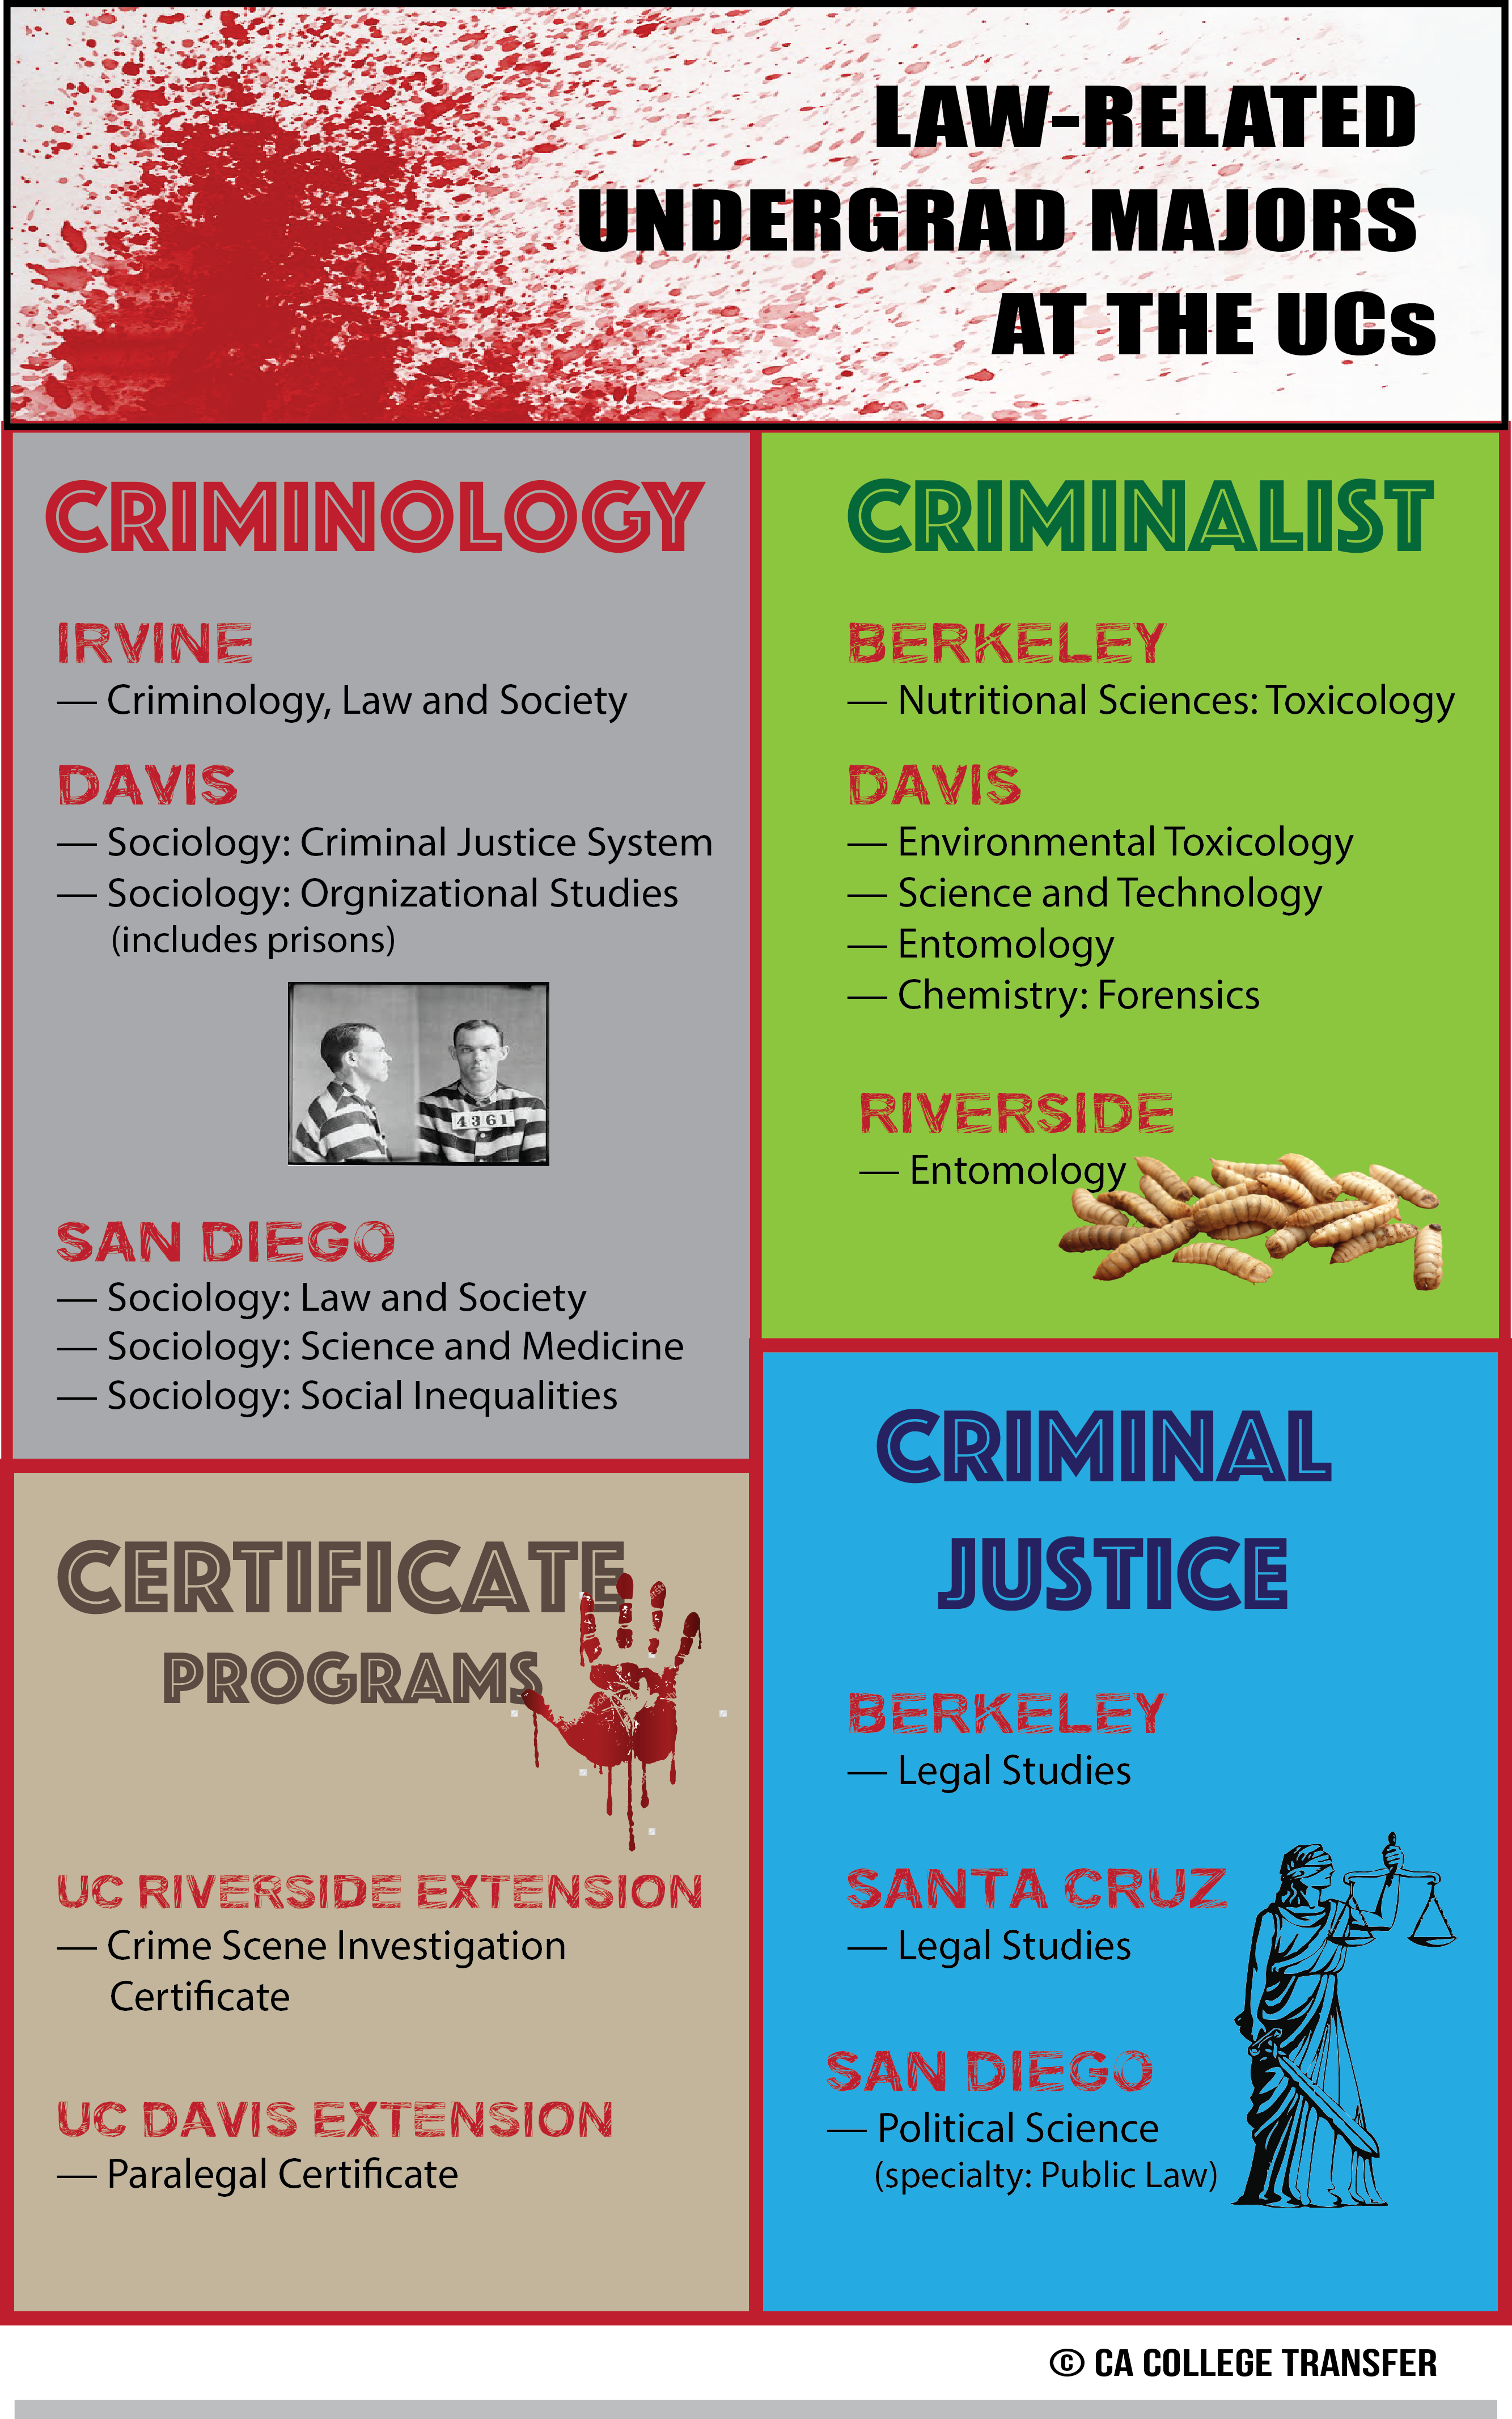 criminology majors at the UC